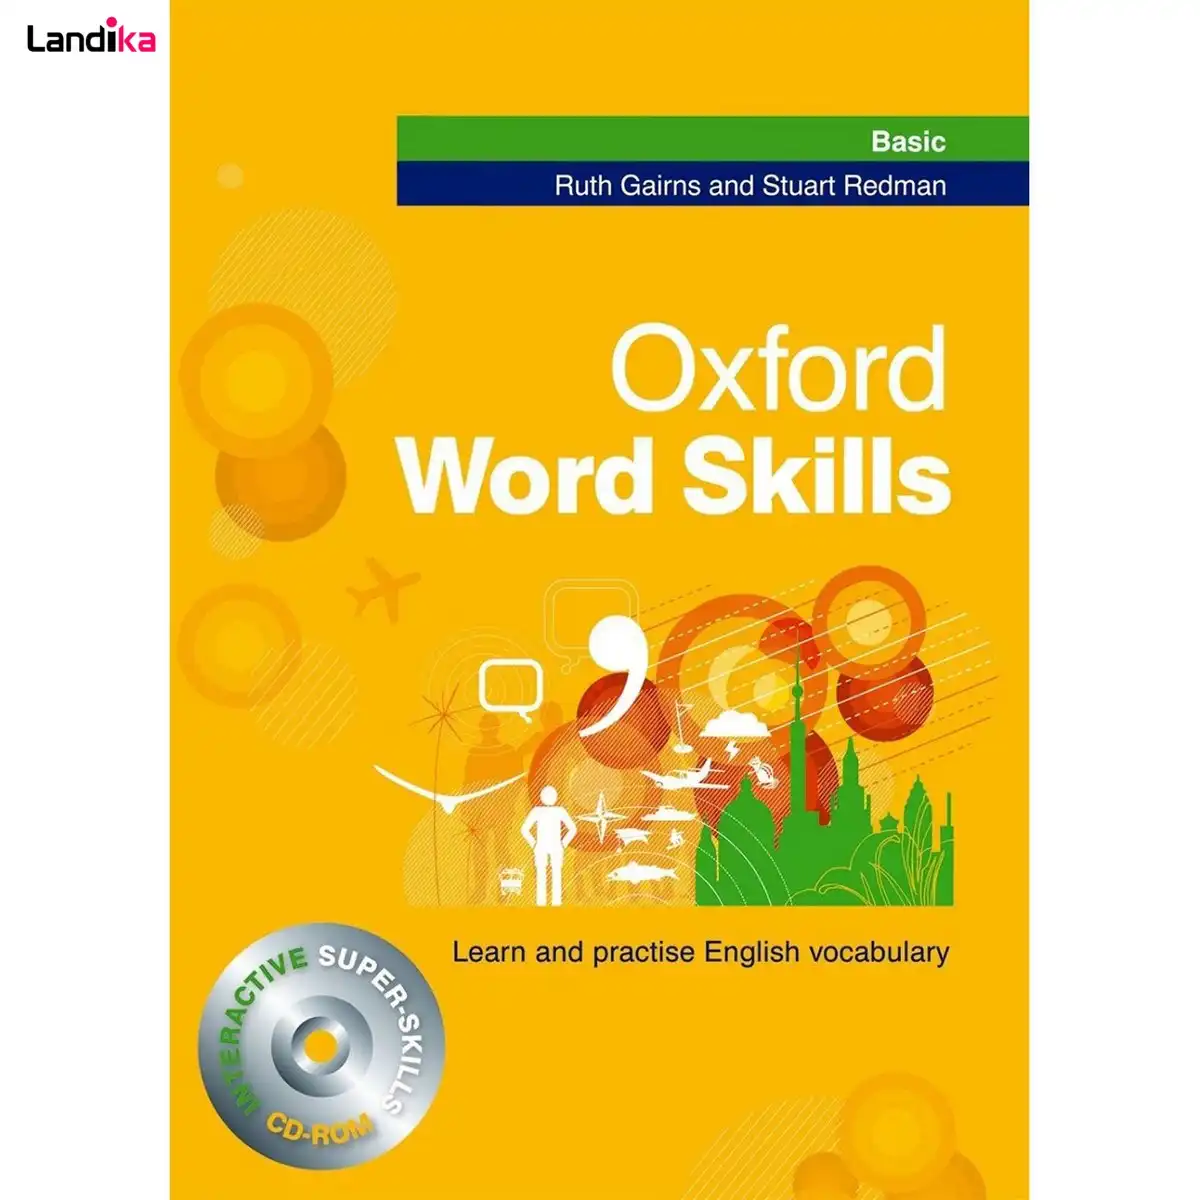 کتاب زبان Oxford Word skills Basic اثر Ruth Gairns